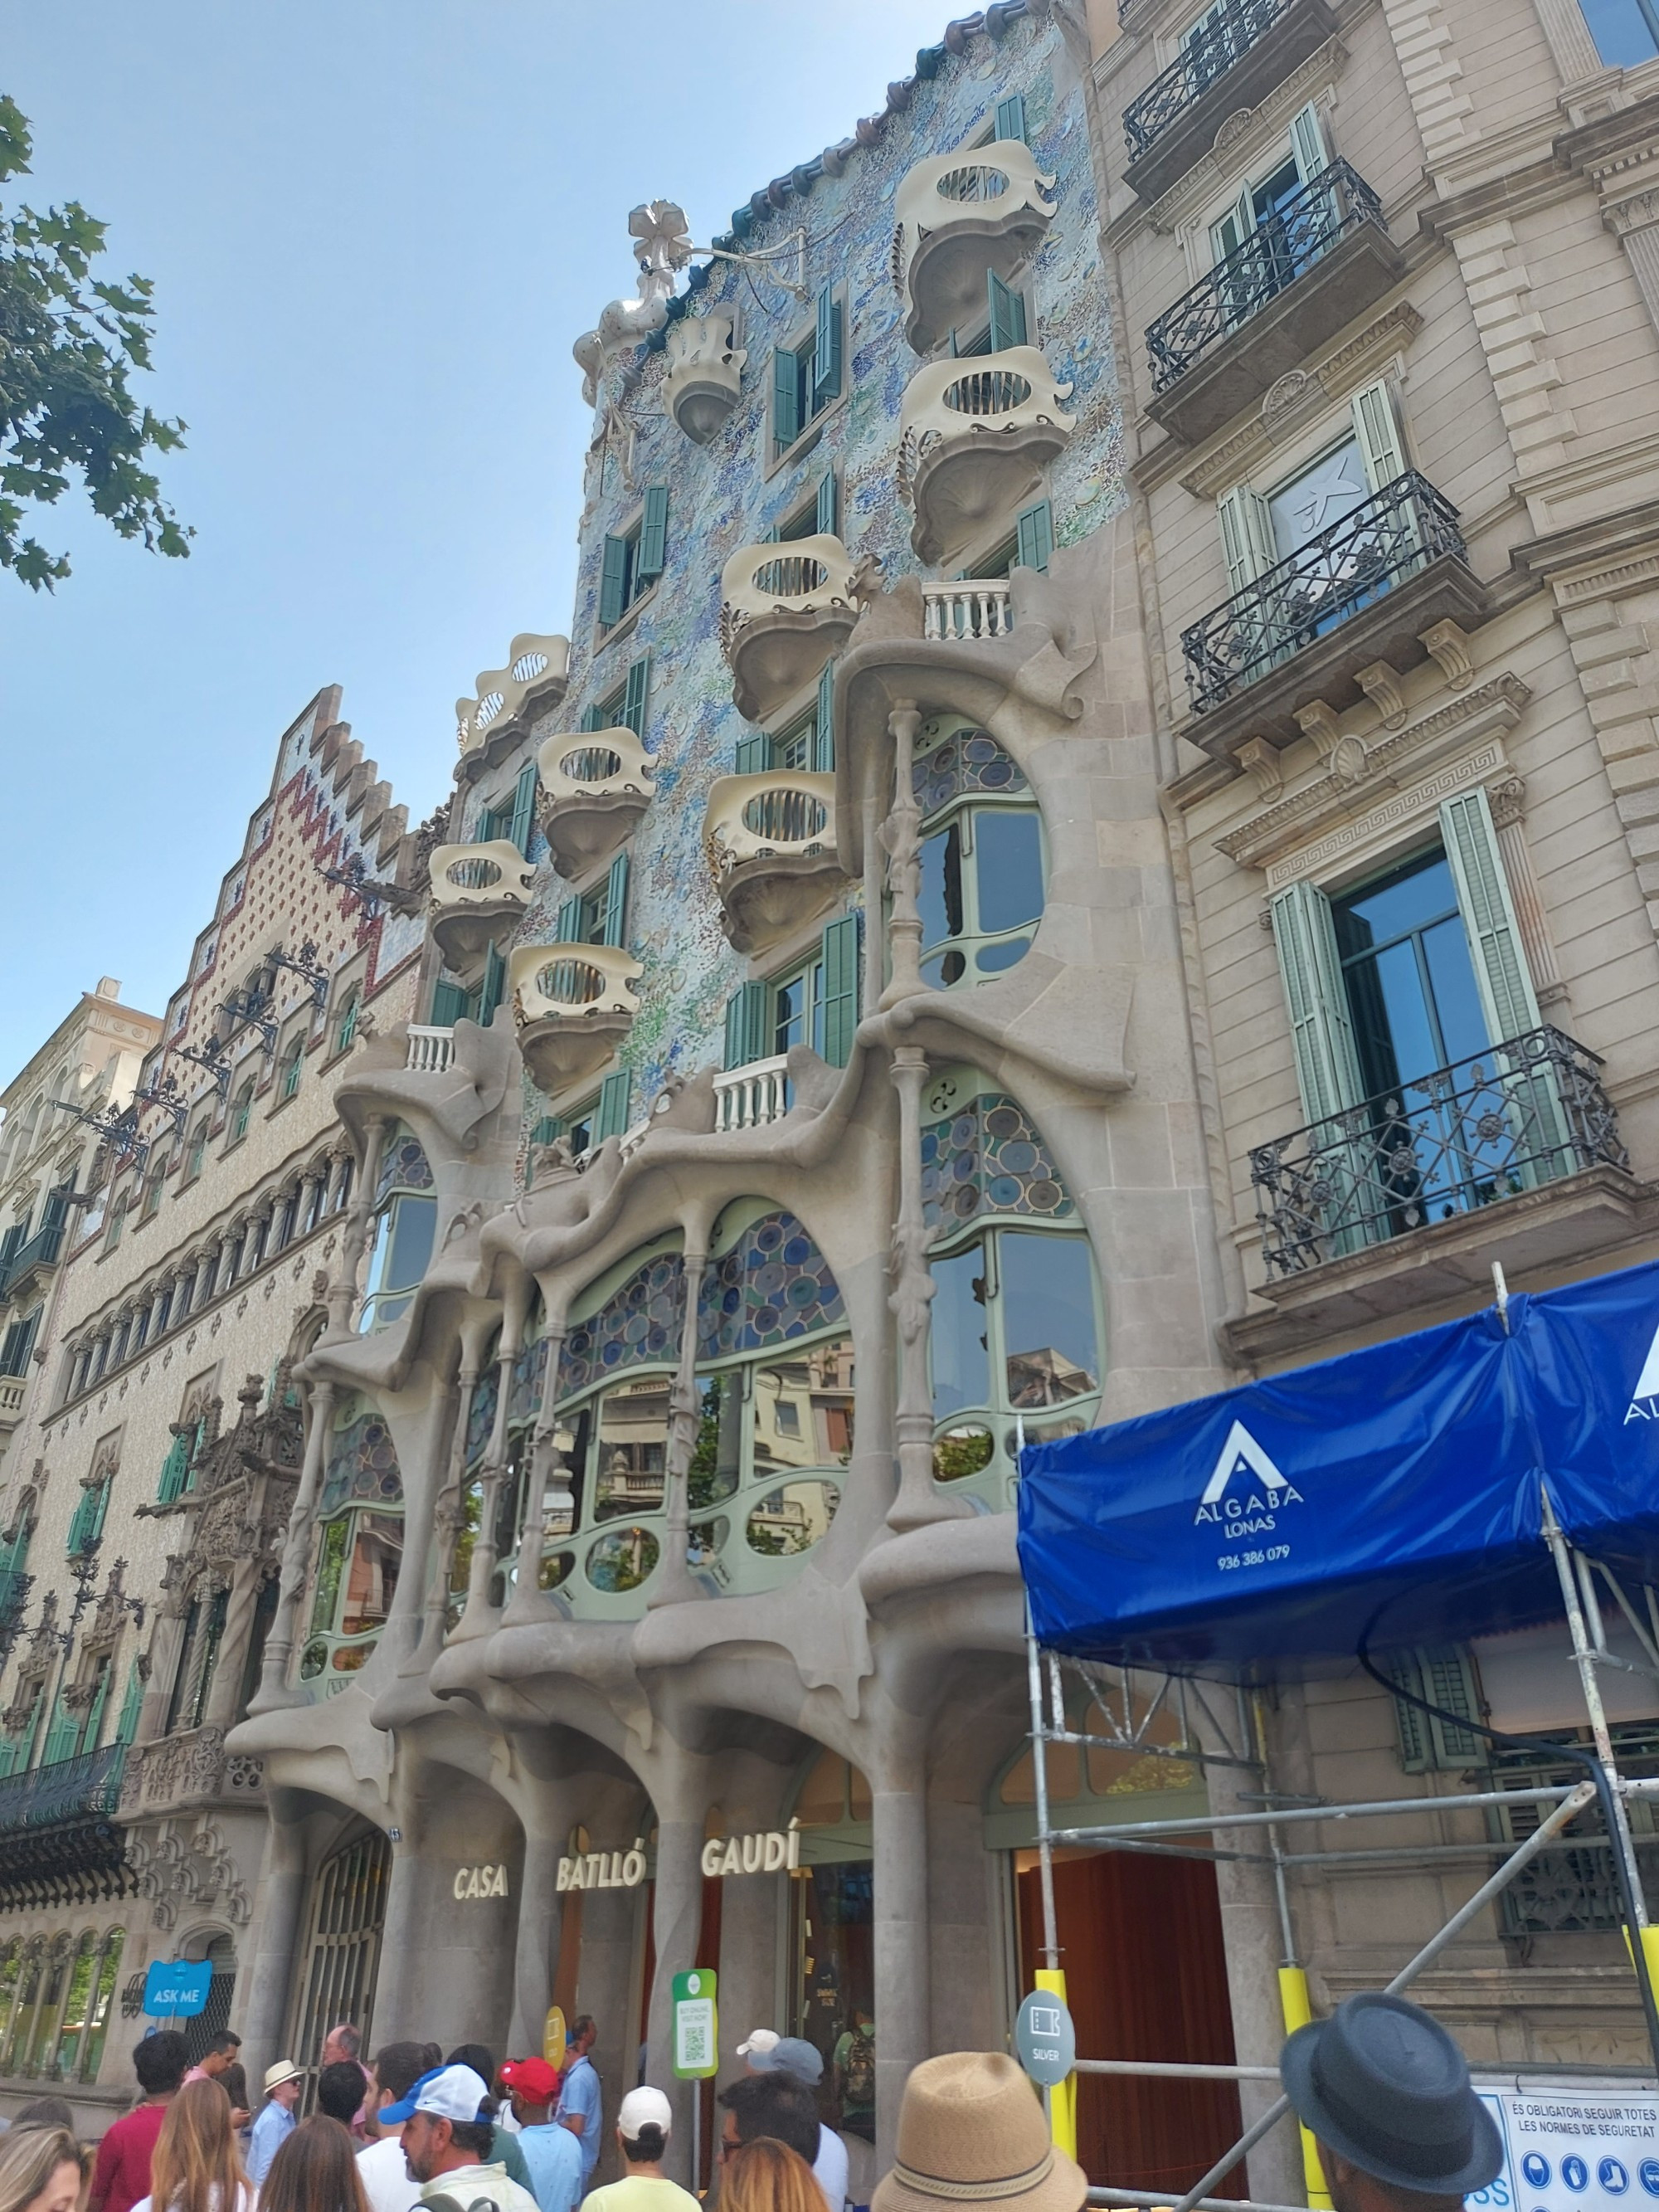 Barcelona, Spain